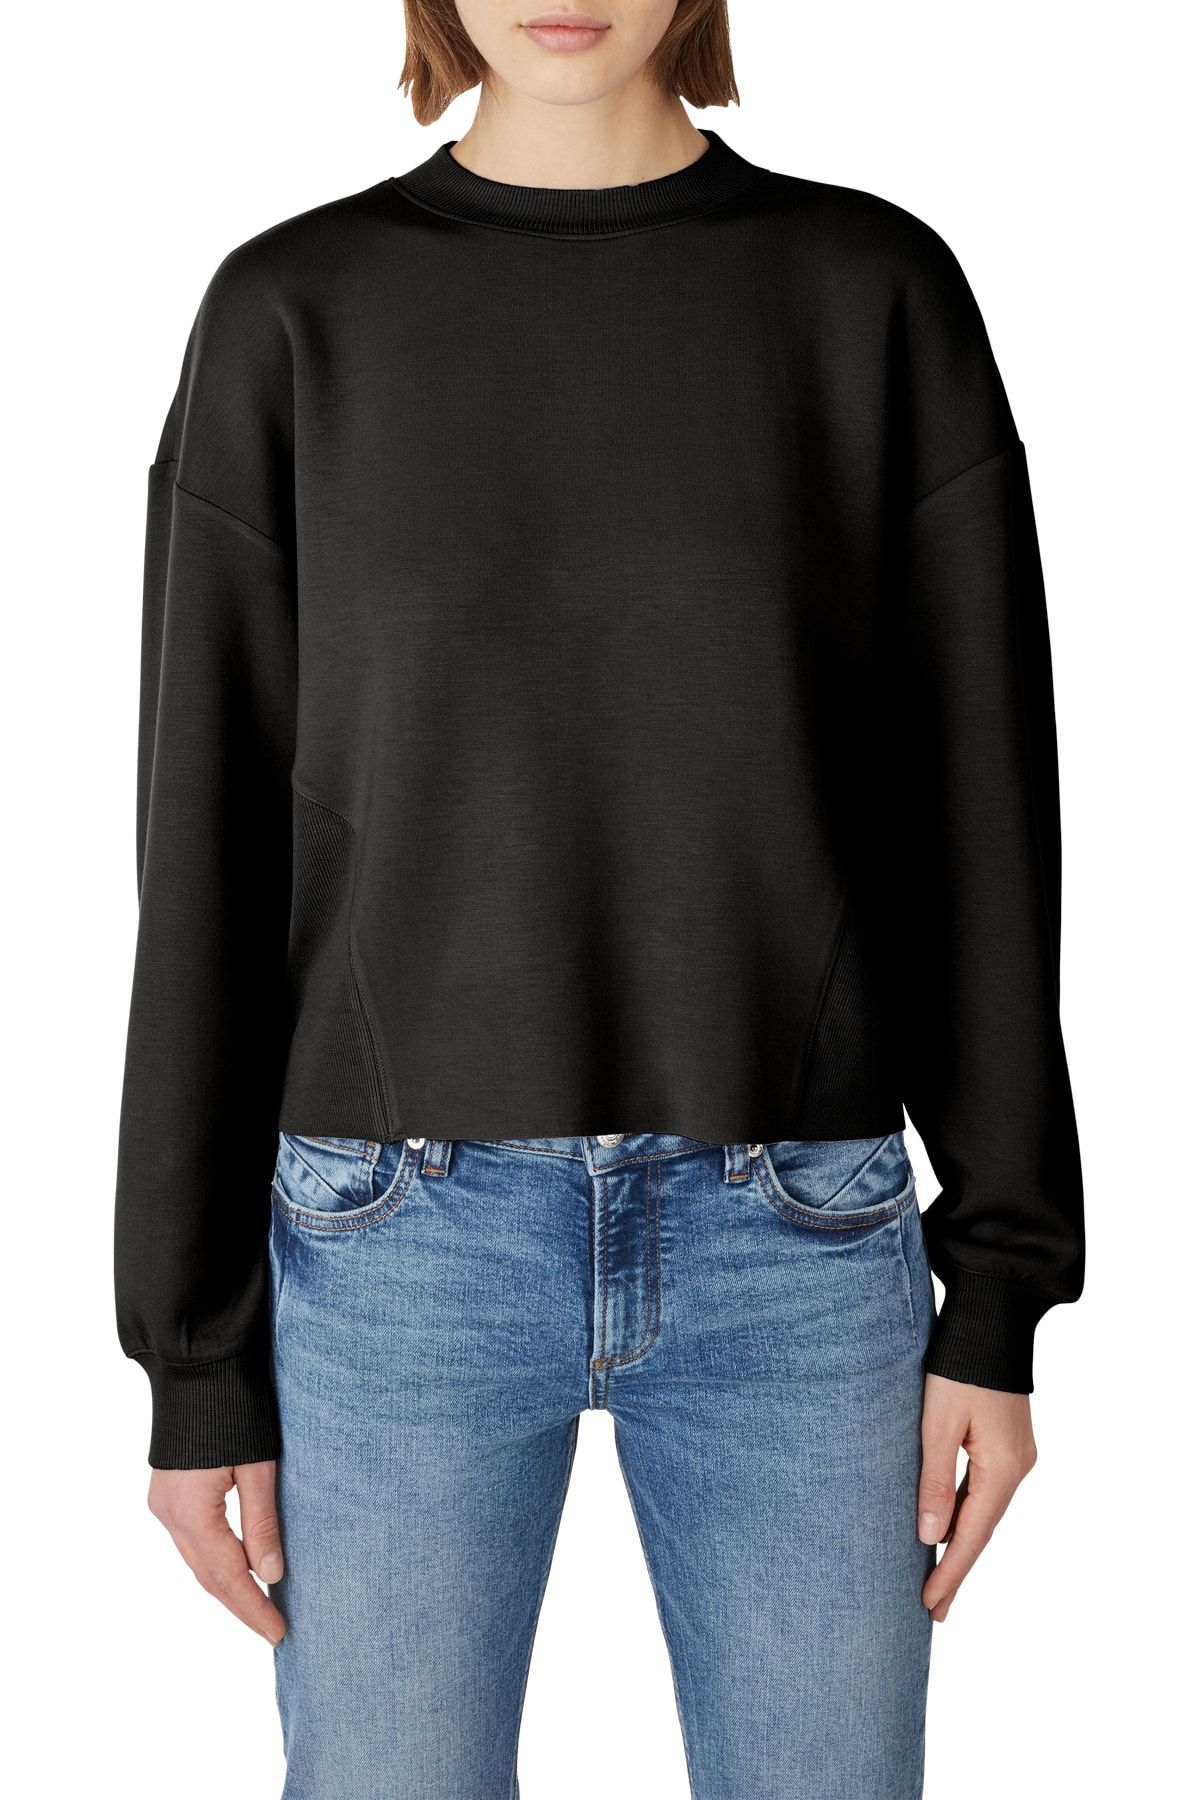 QS by s.Oliver Sweatshirt - Black - Regular fit - Trendyol | Sweatshirts